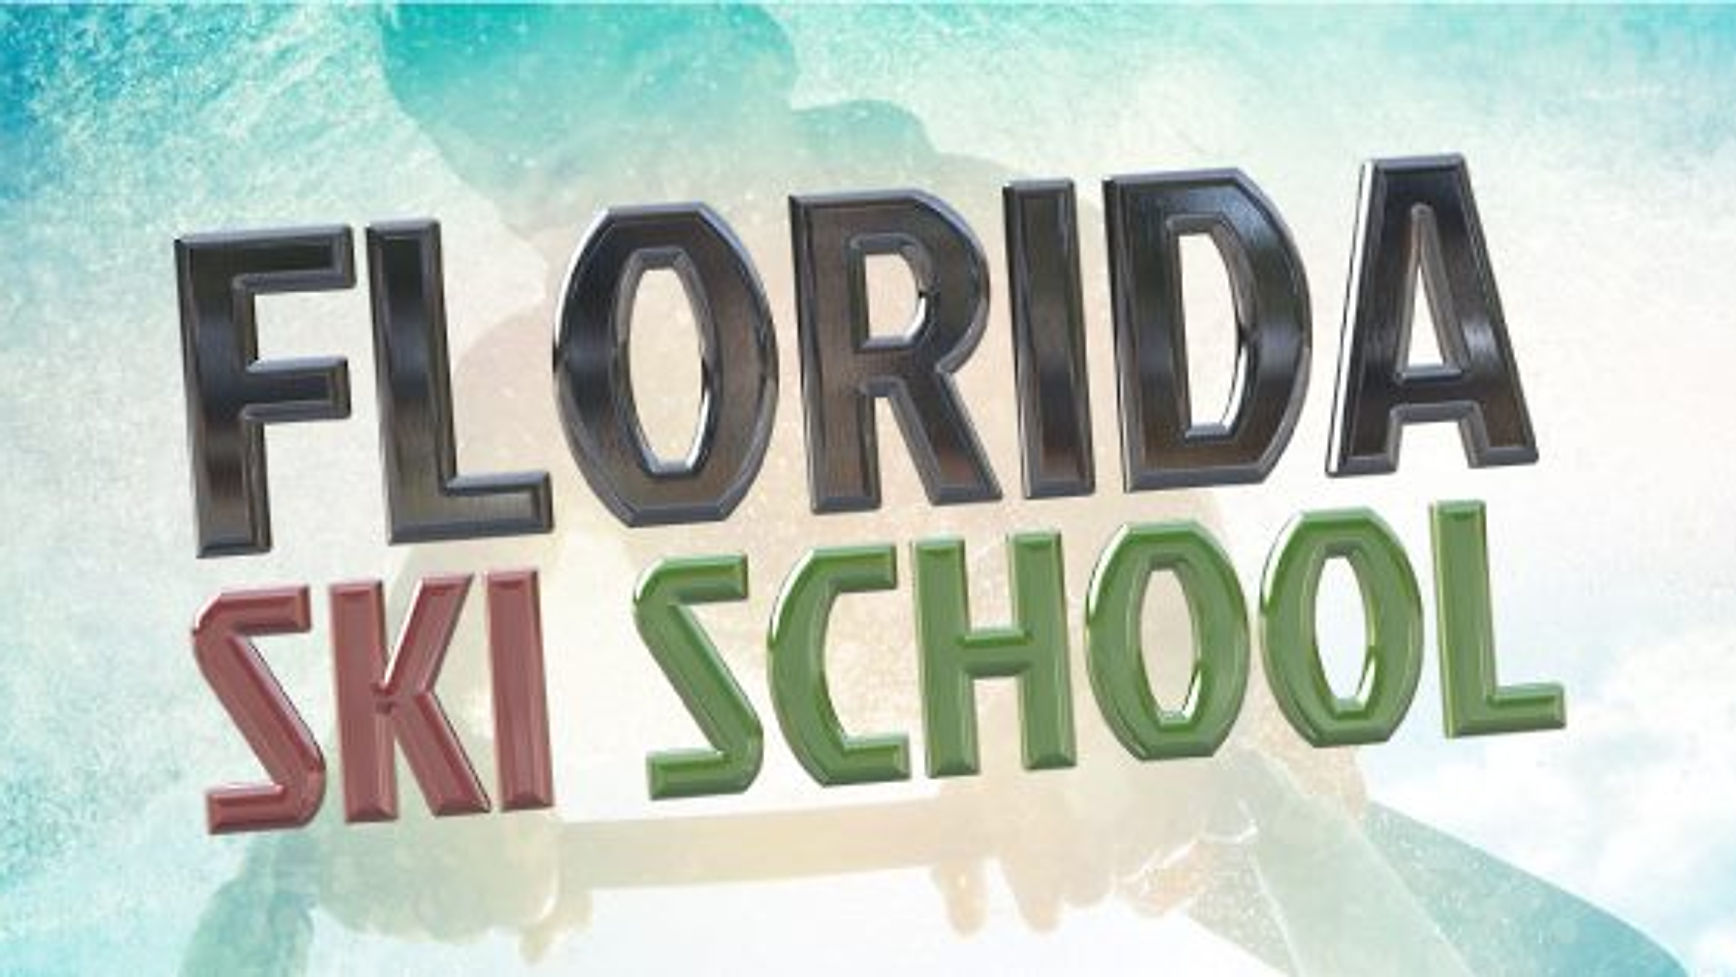 Florida Ski School